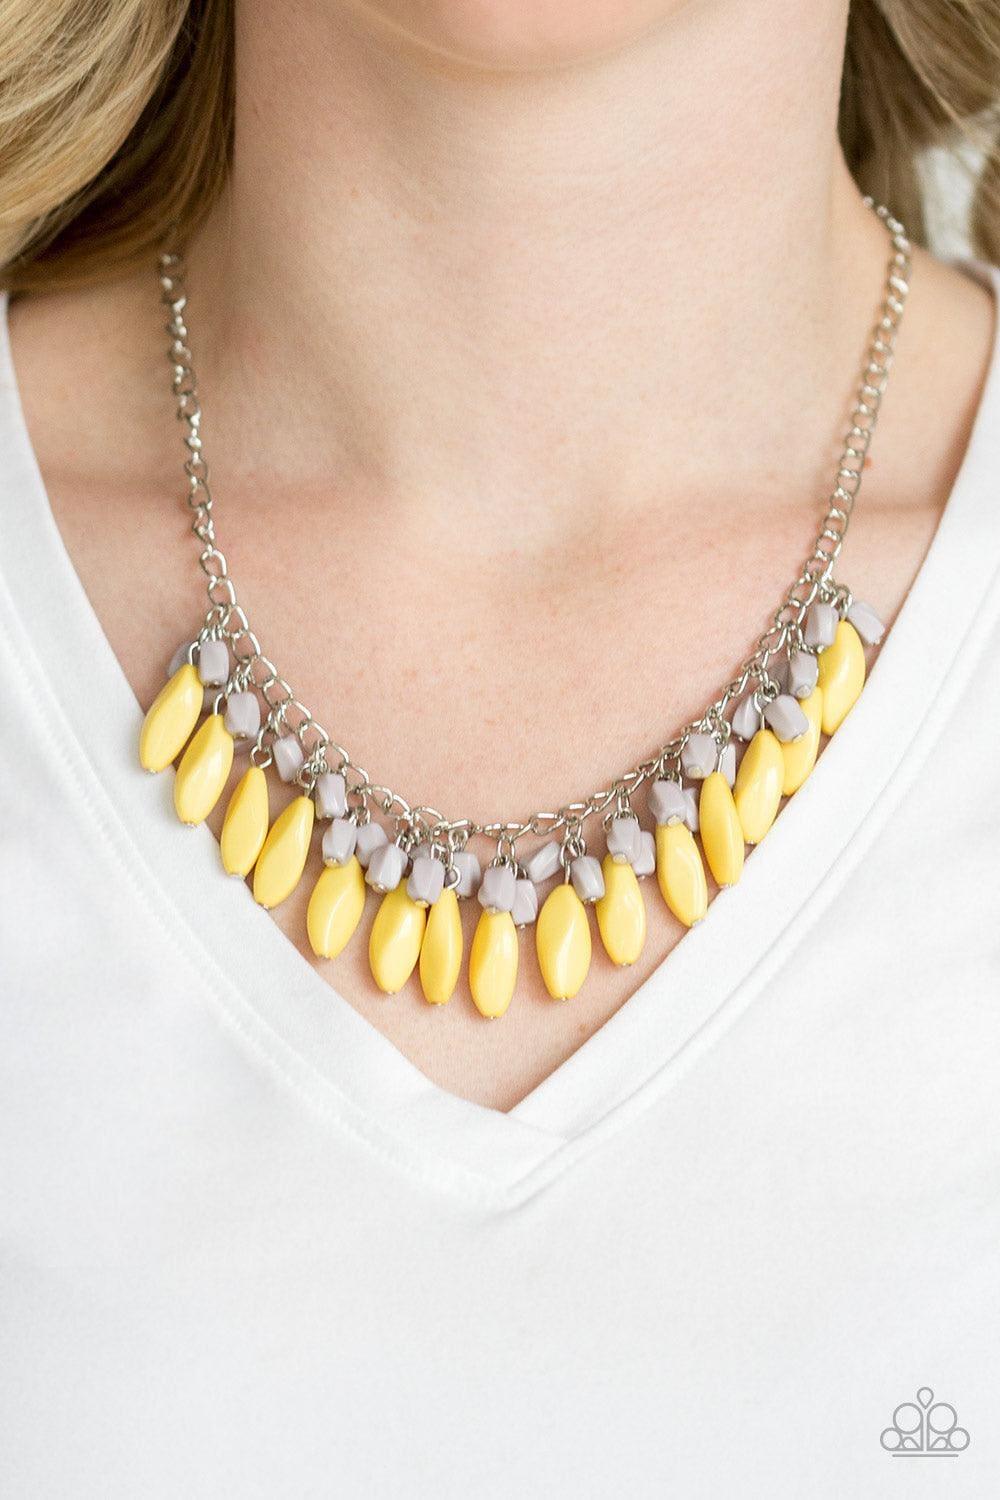 Paparazzi Accessories - Bead Binge - Yellow Necklace - Bling by JessieK